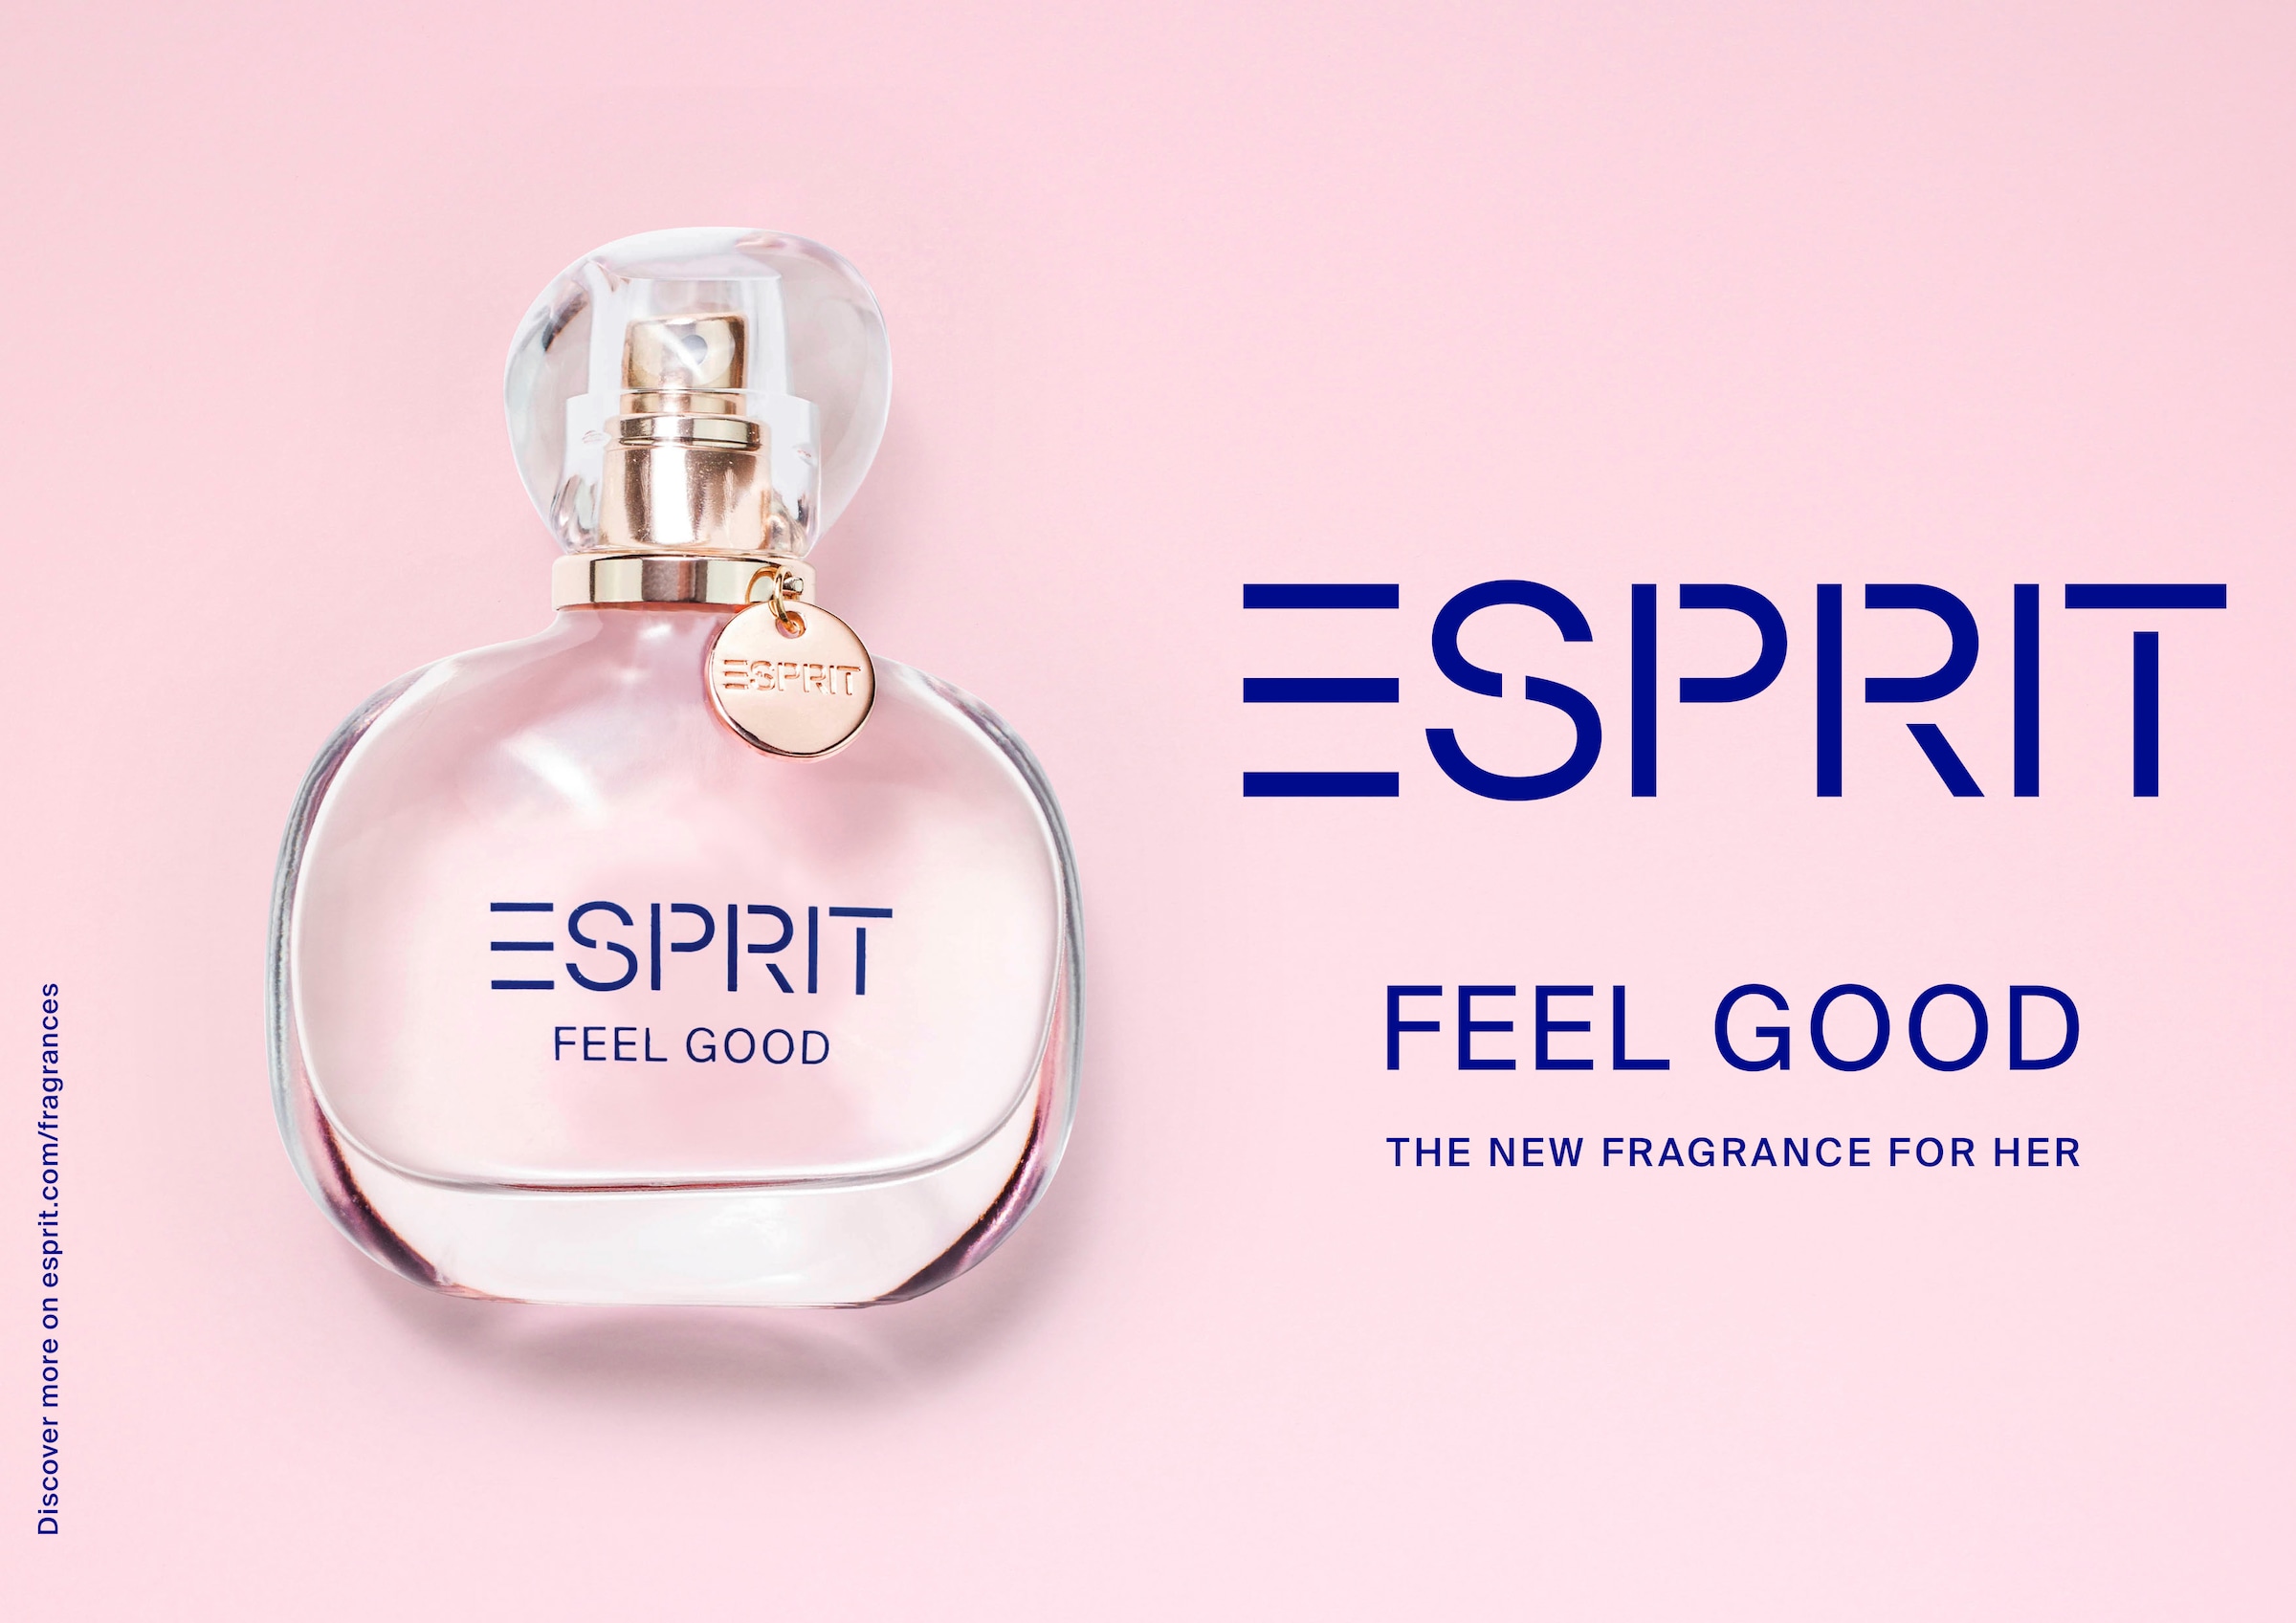 Esprit Eau de Parfum »FEEL GOOD bei EdP online UNIVERSAL ml« for 20 her